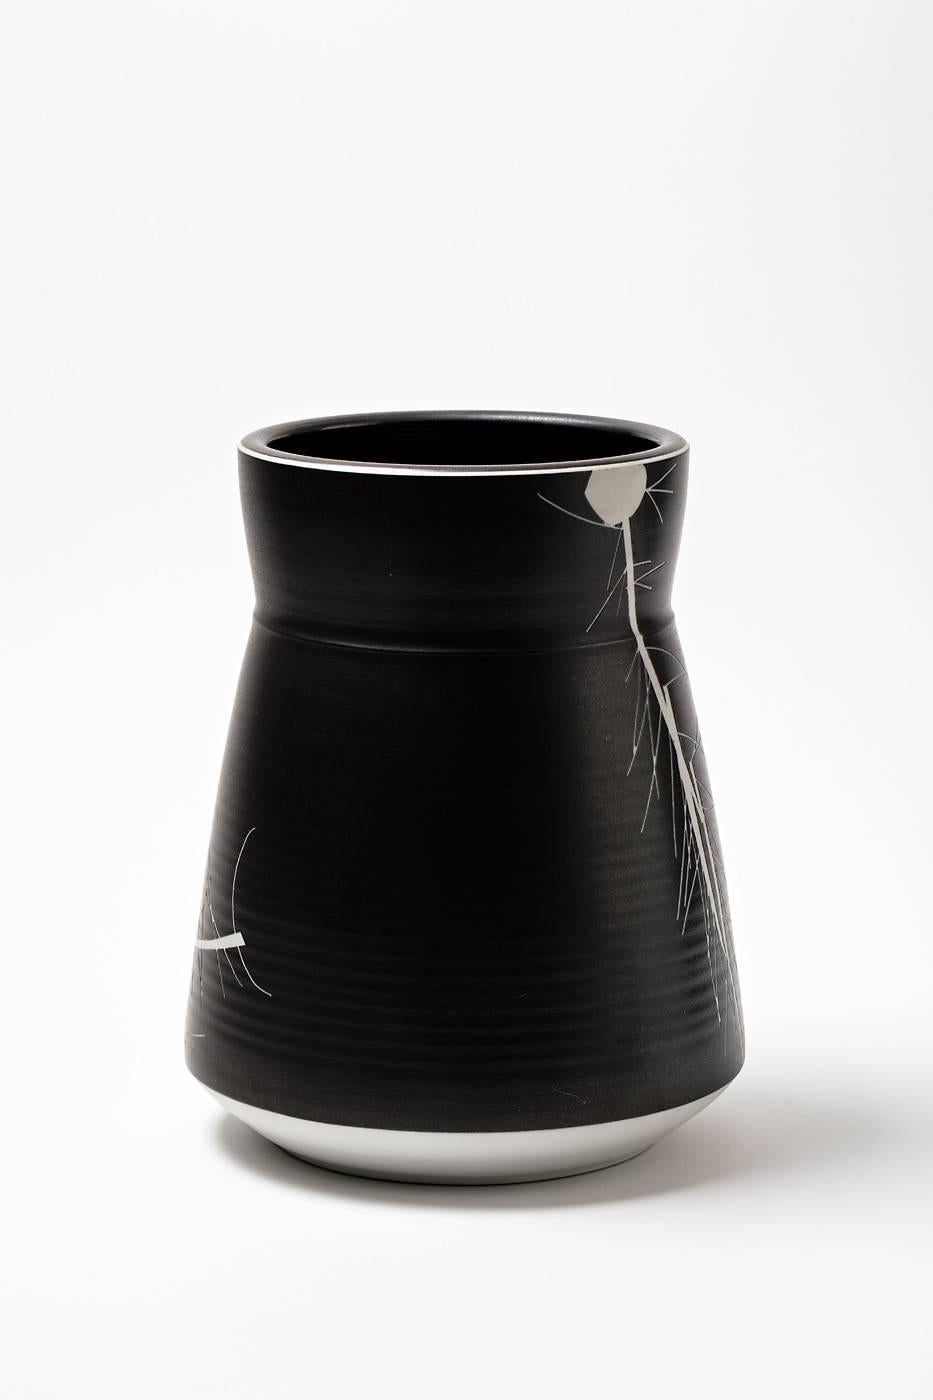 French Porcelain Vase by Robert Deblander, circa 1990